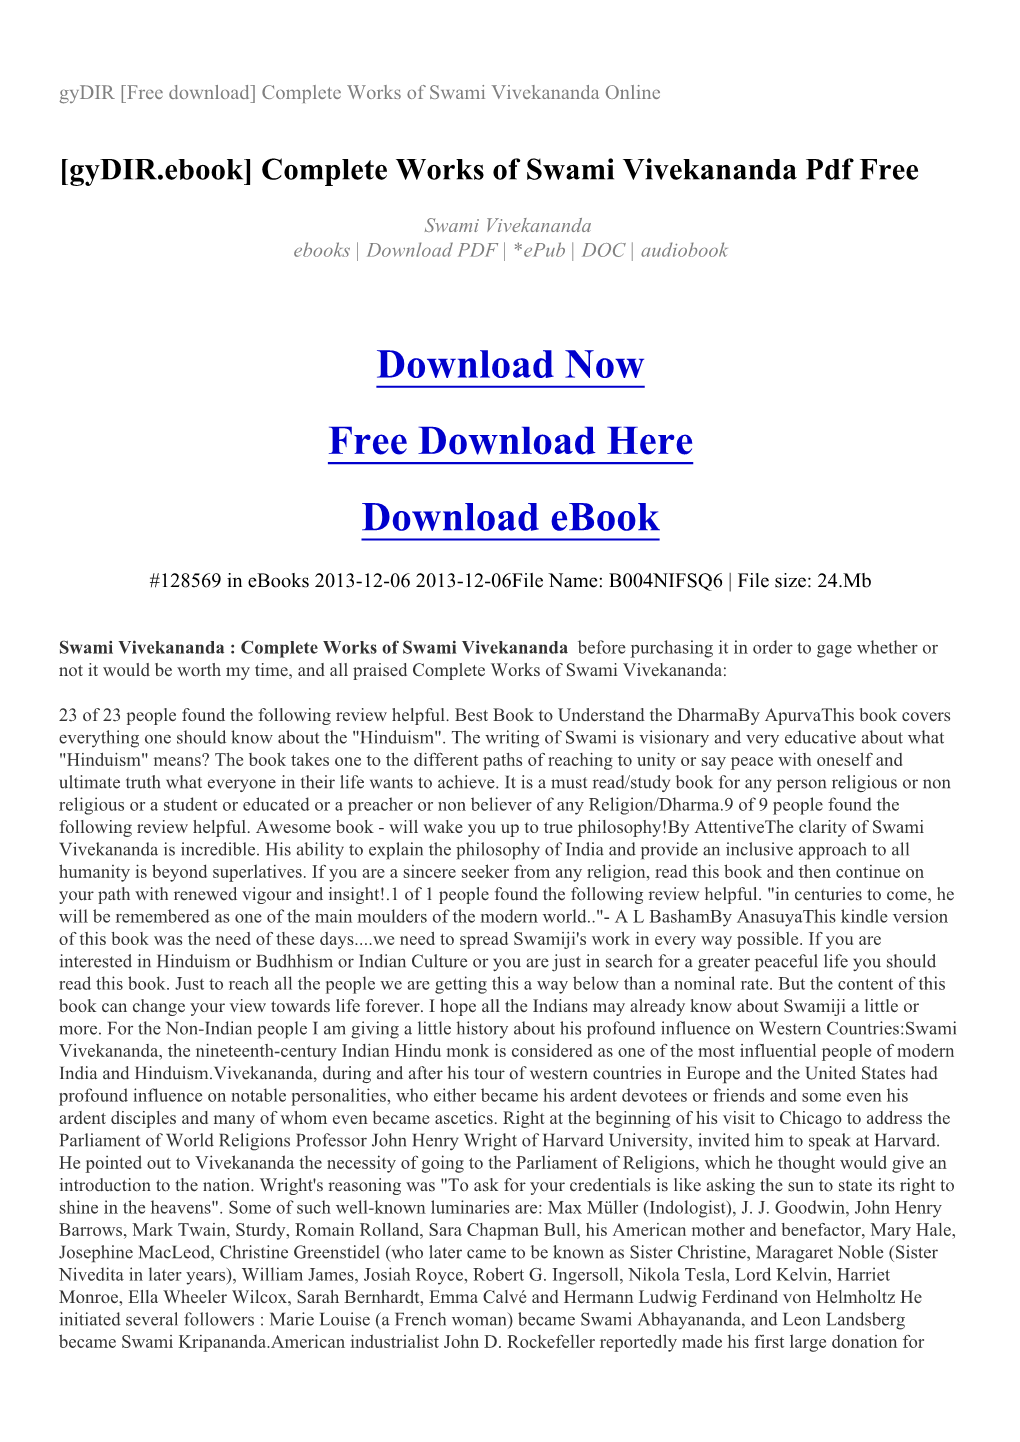 Complete Works of Swami Vivekananda Online